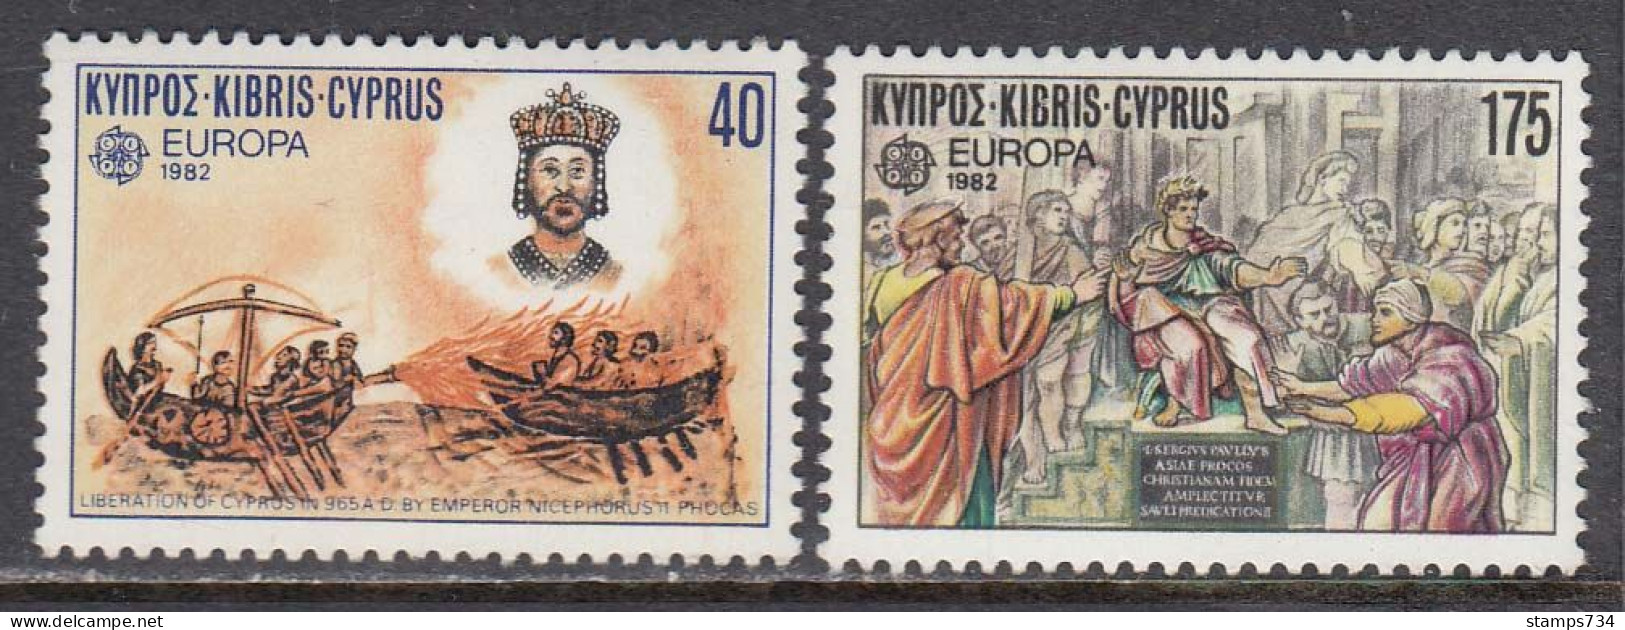 Cyprus 1982 - EUROPA(Faits Historiques), Mi-Nr. 566/67, MNH** - Nuovi